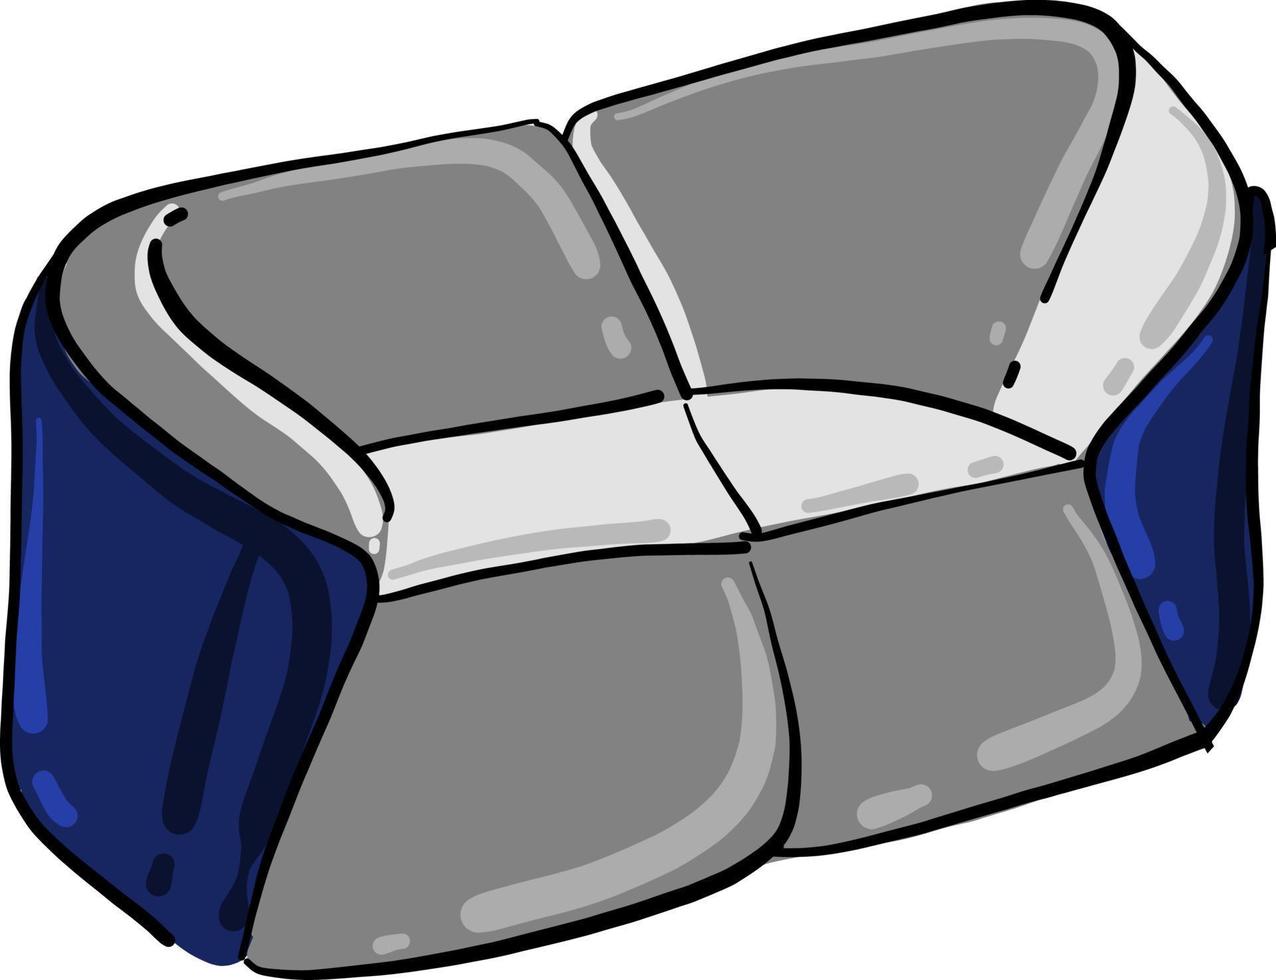 Cozy sofa, illustration, vector on white background